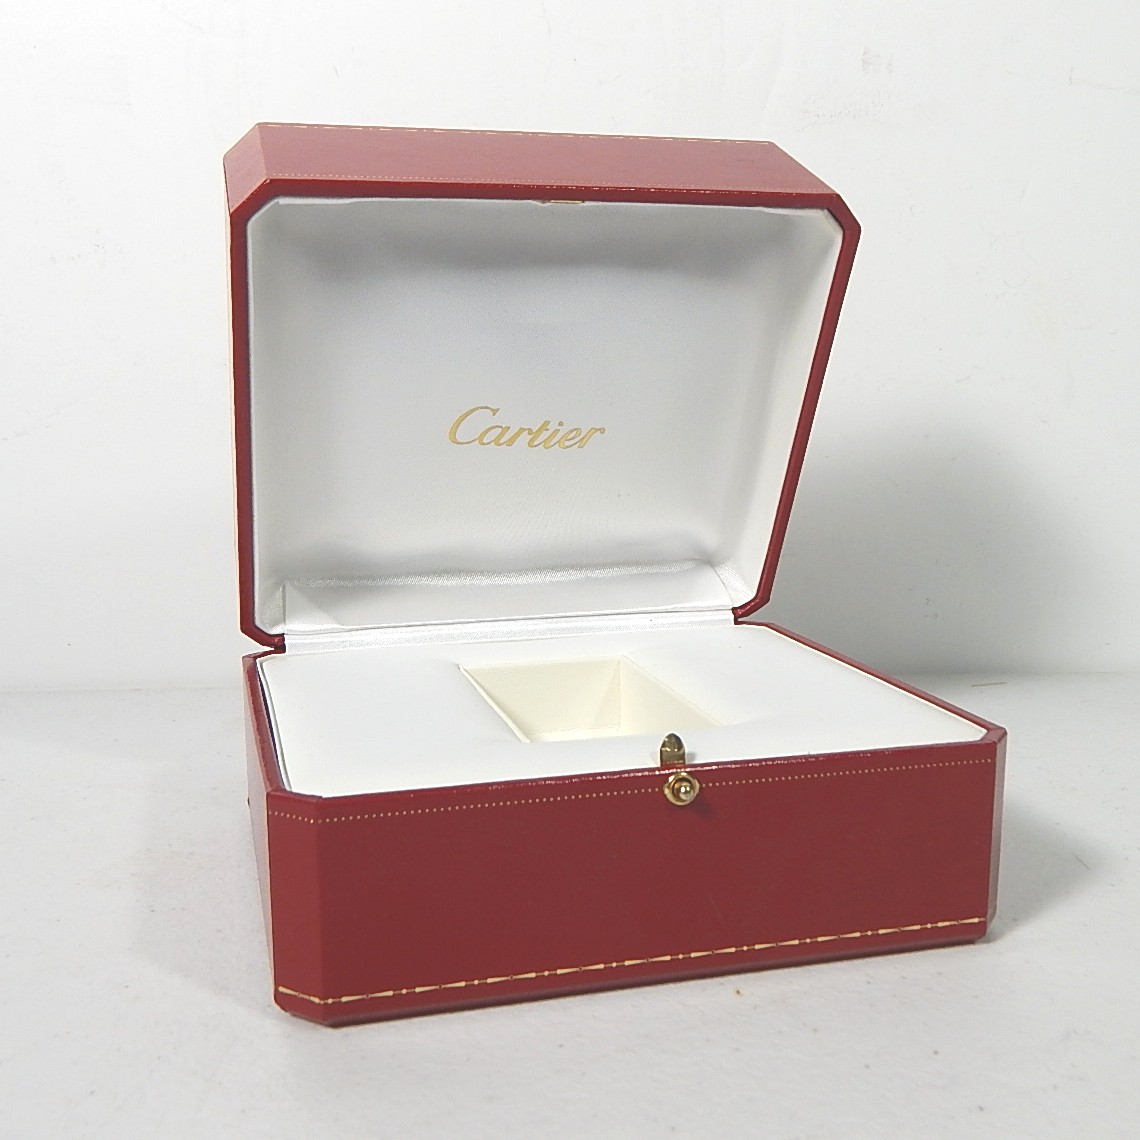 cartier watch presentation box